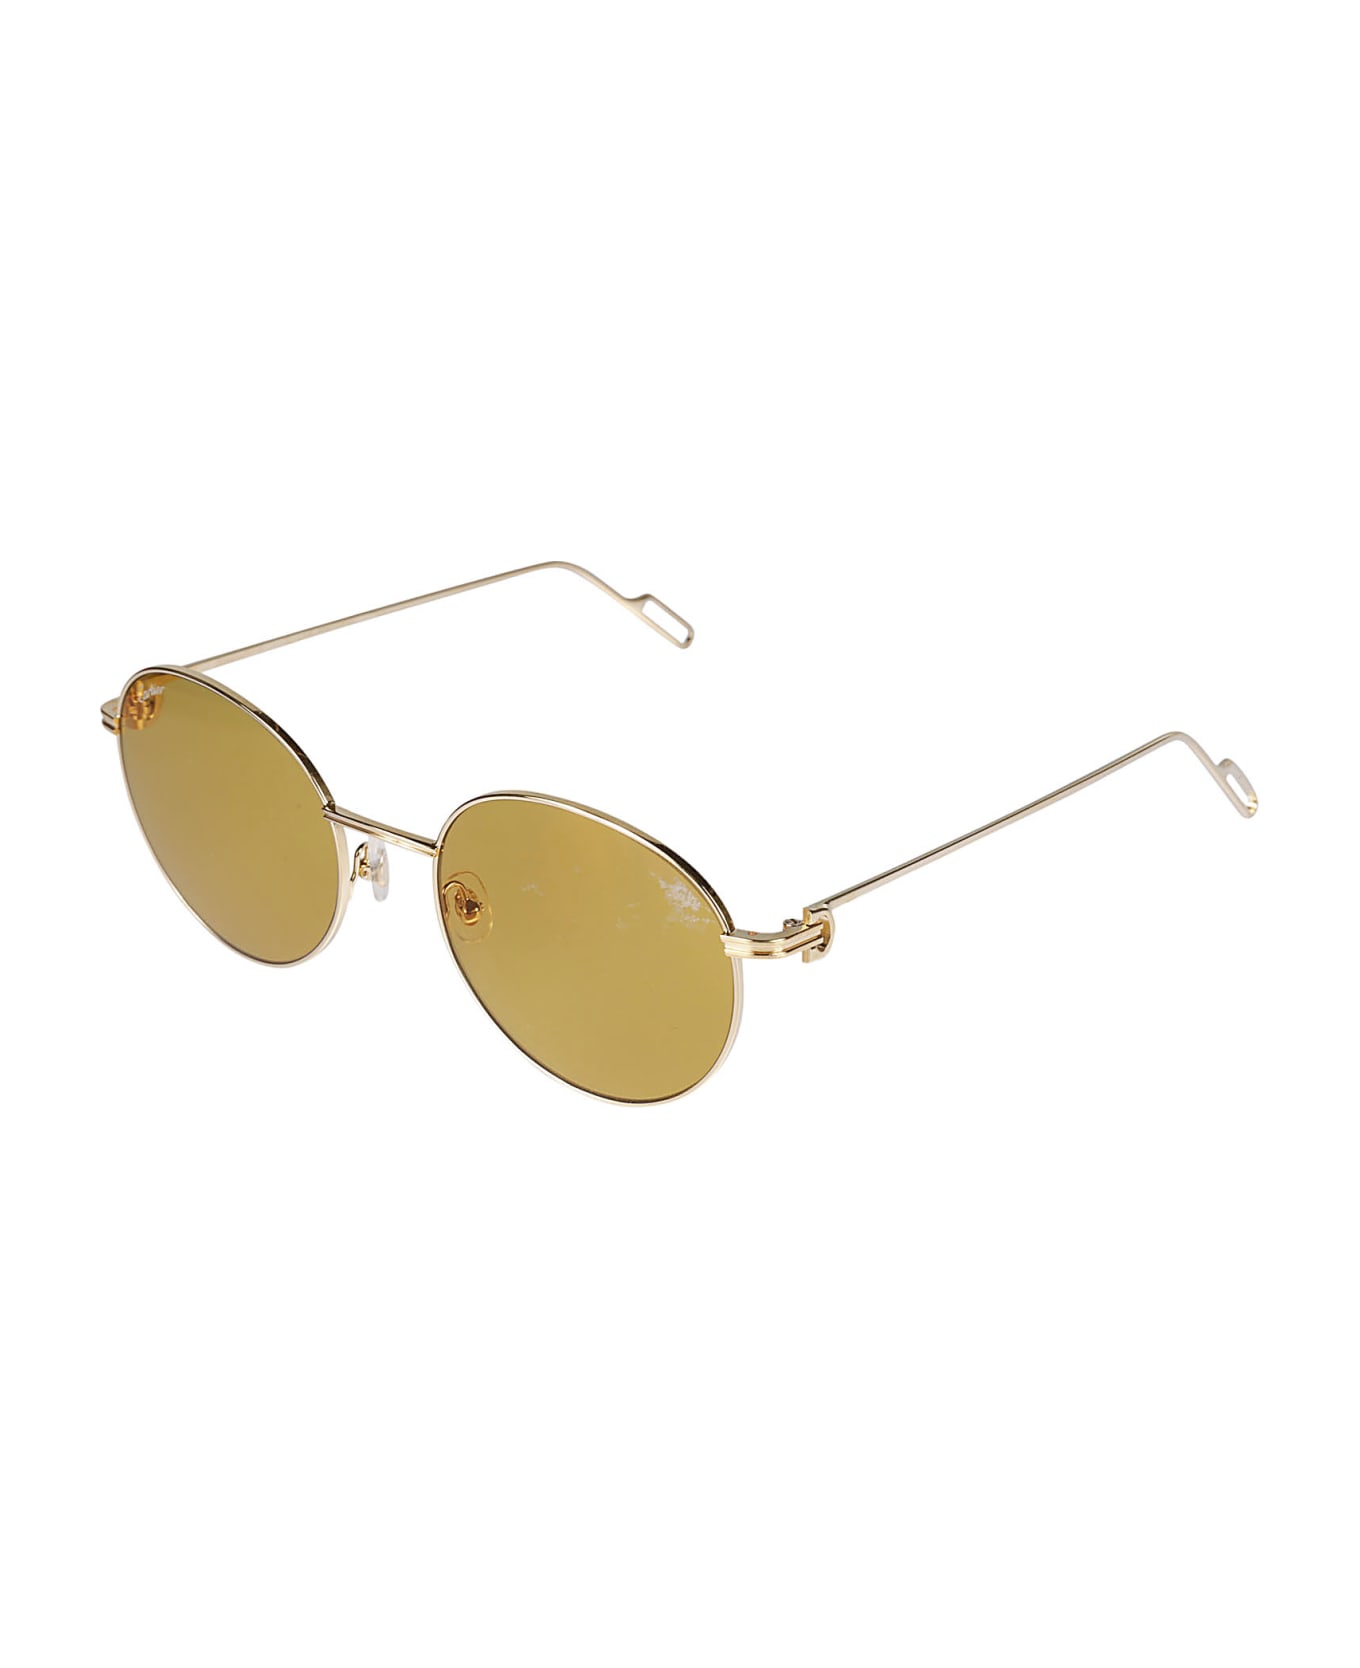 Cartier Eyewear Round Logo Sunglasses - 004 gold gold yellow サングラス